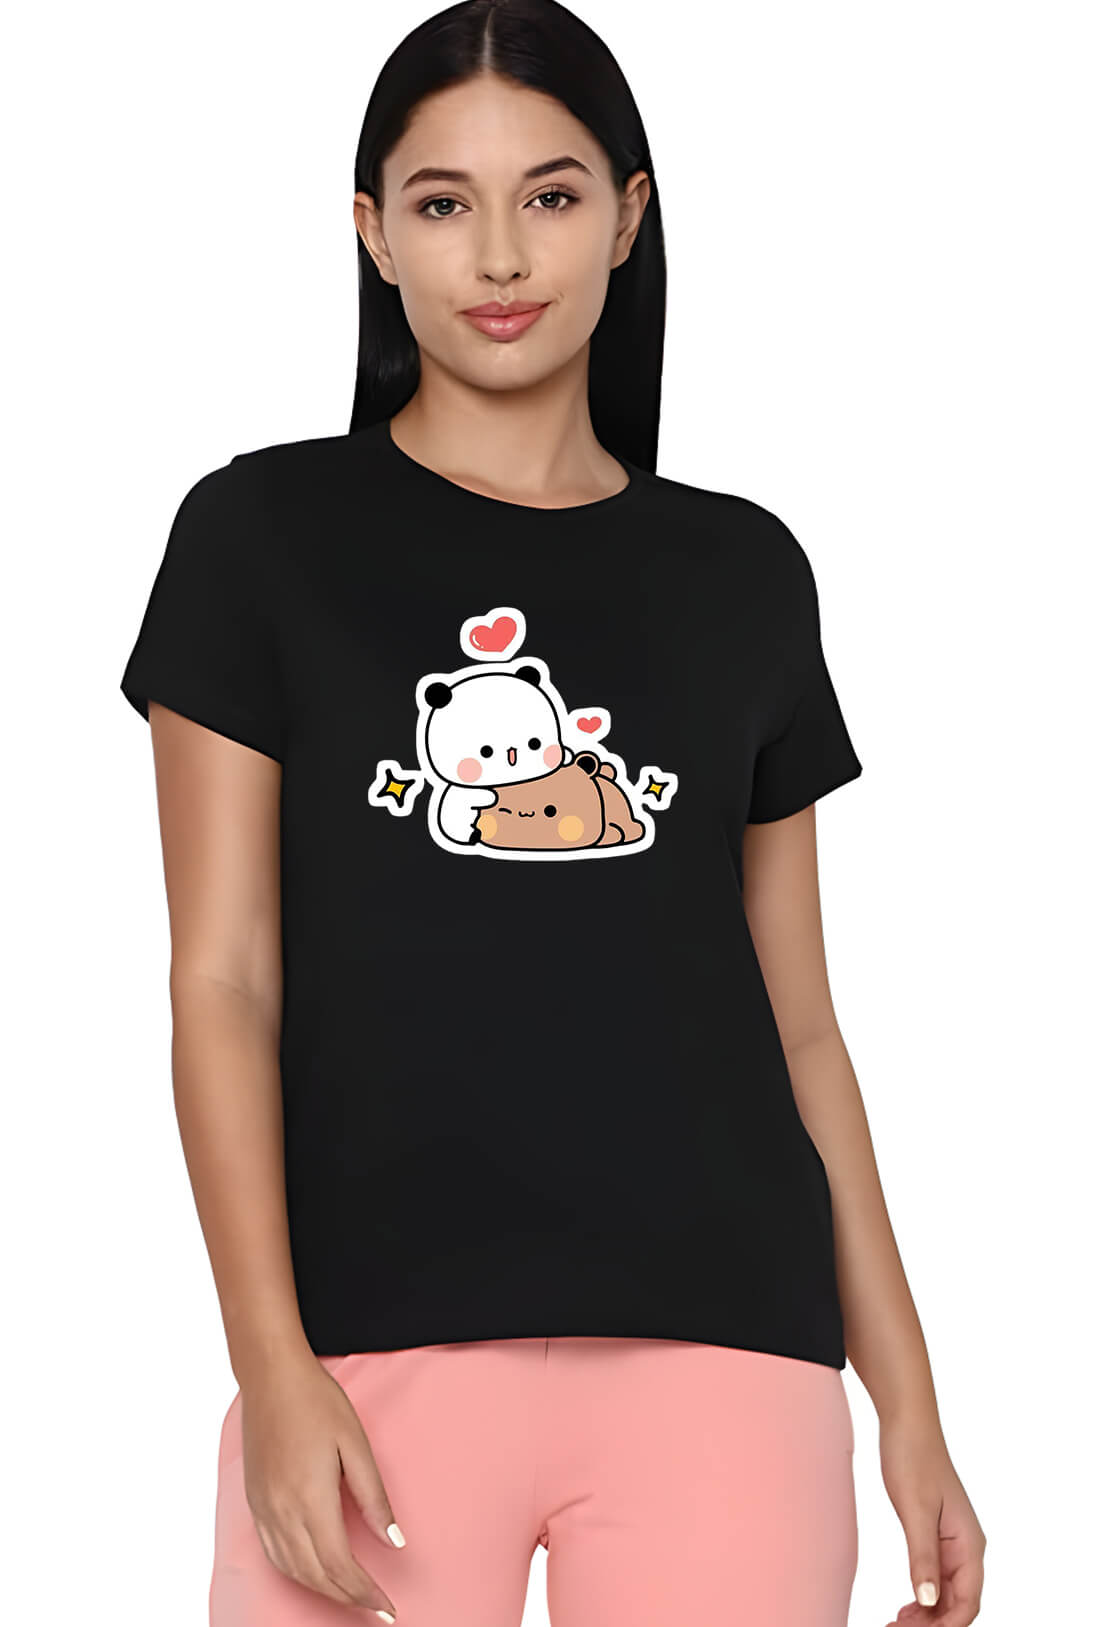 Bear & Panda Printed Women's Cotton T-Shirt